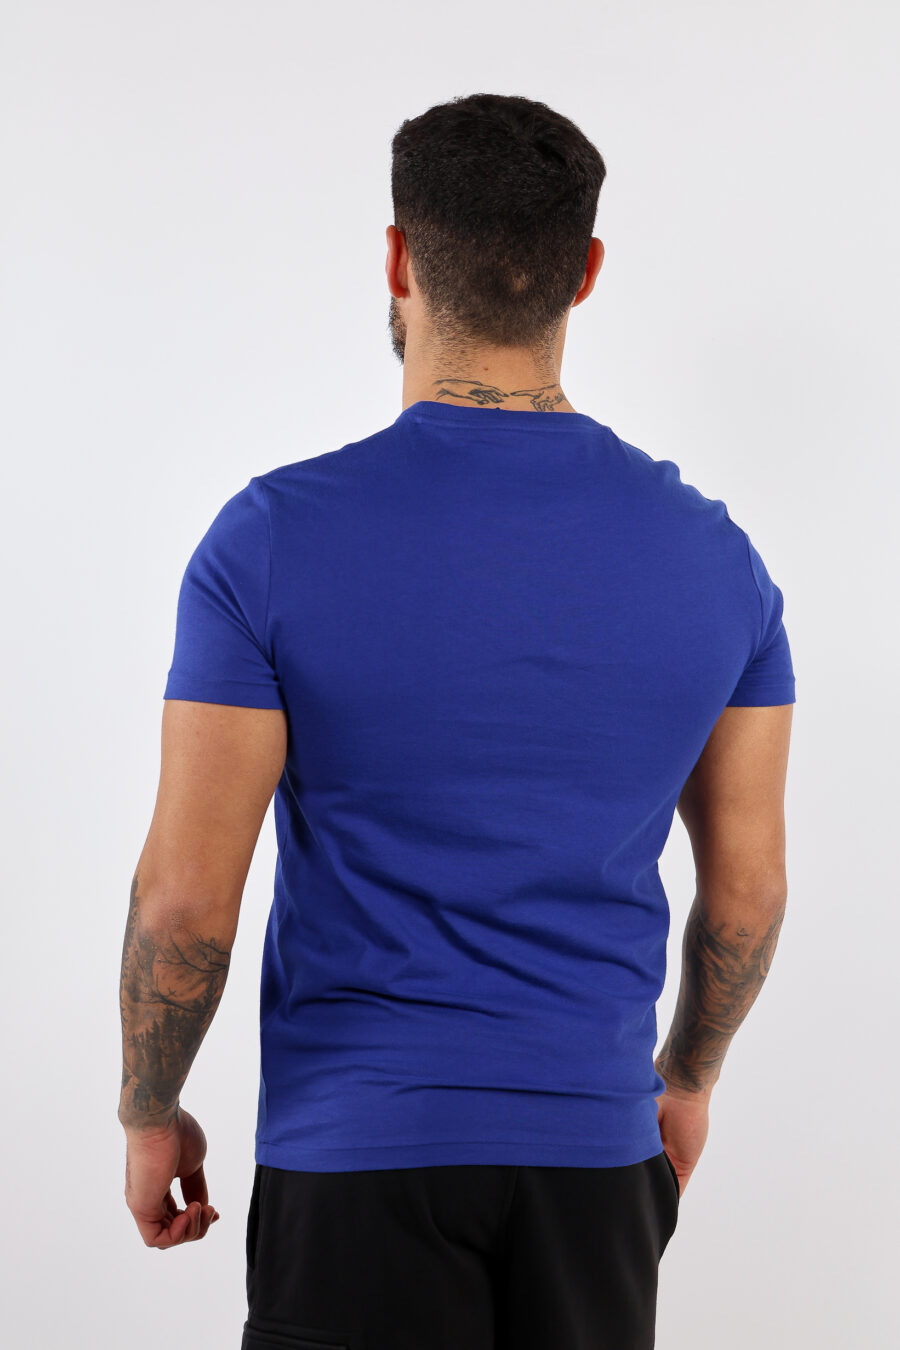 Camiseta azul con minilogo "polo" - BLS Fashion 284